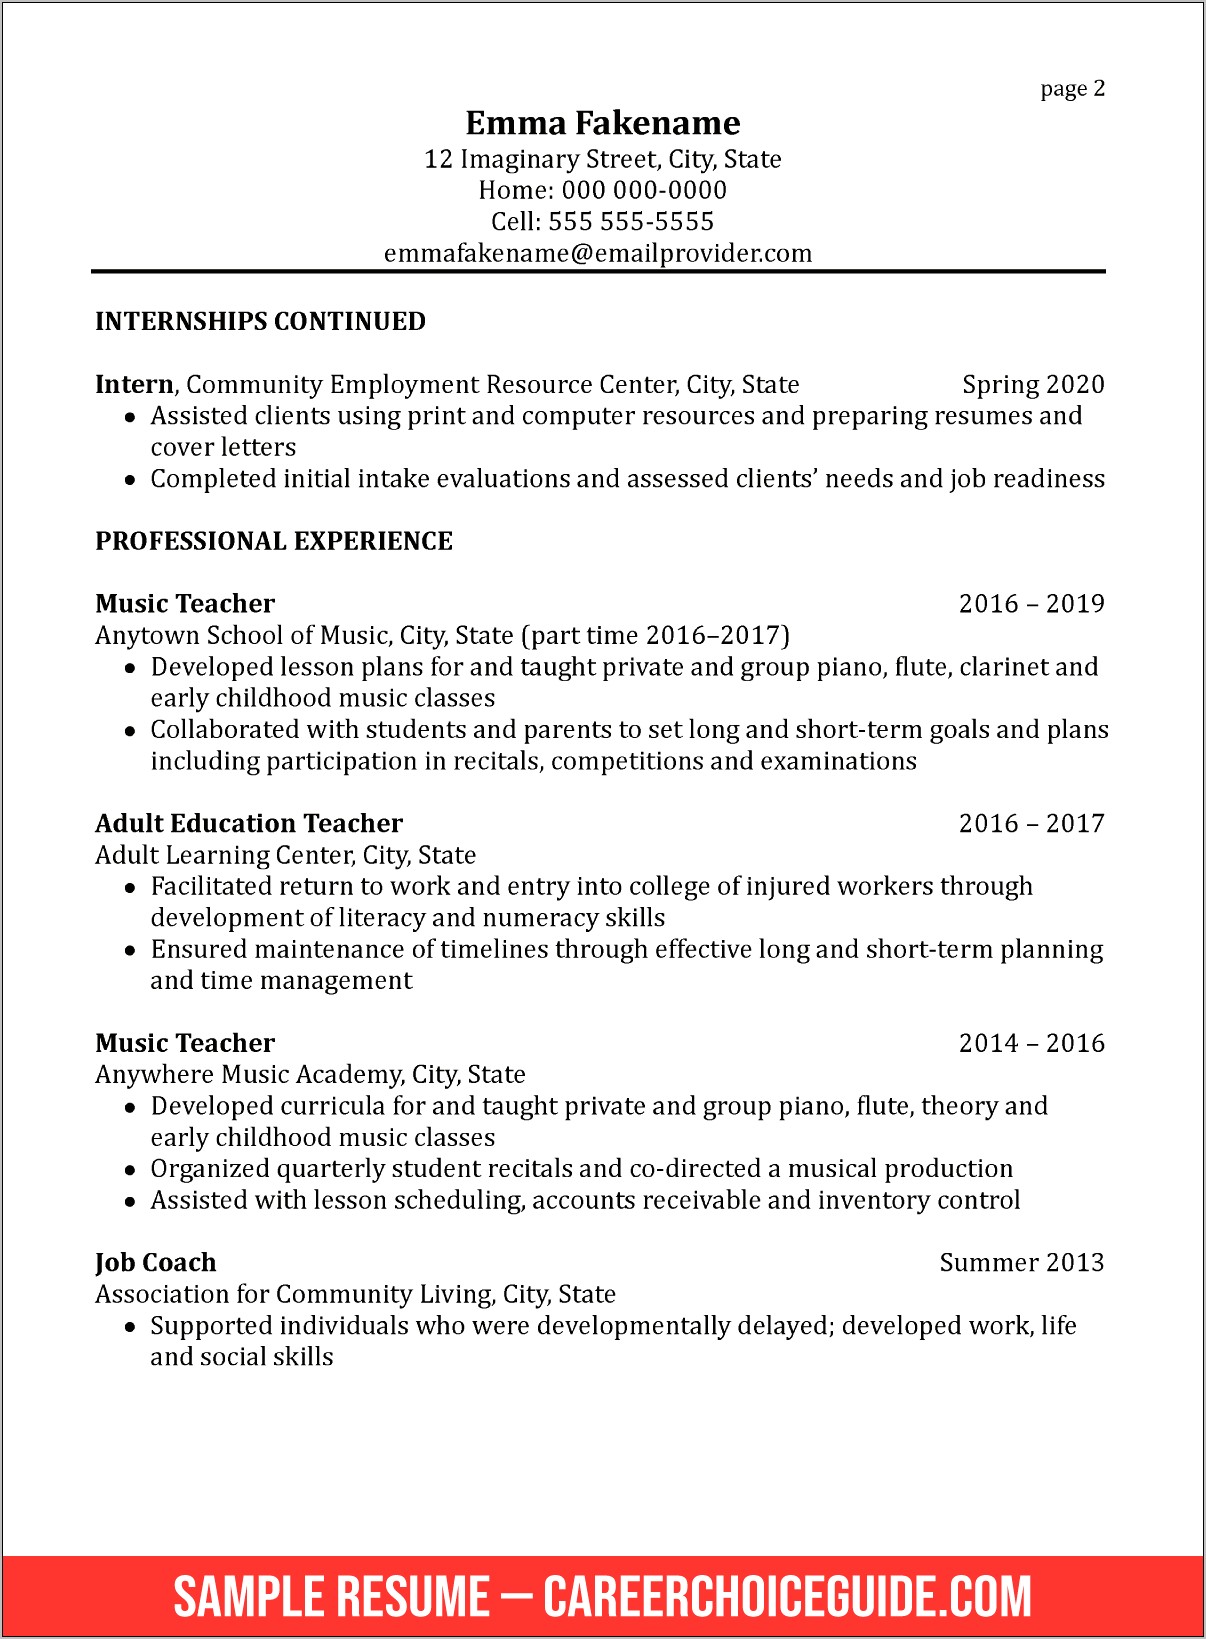 Examples Of Professional Development On Resume